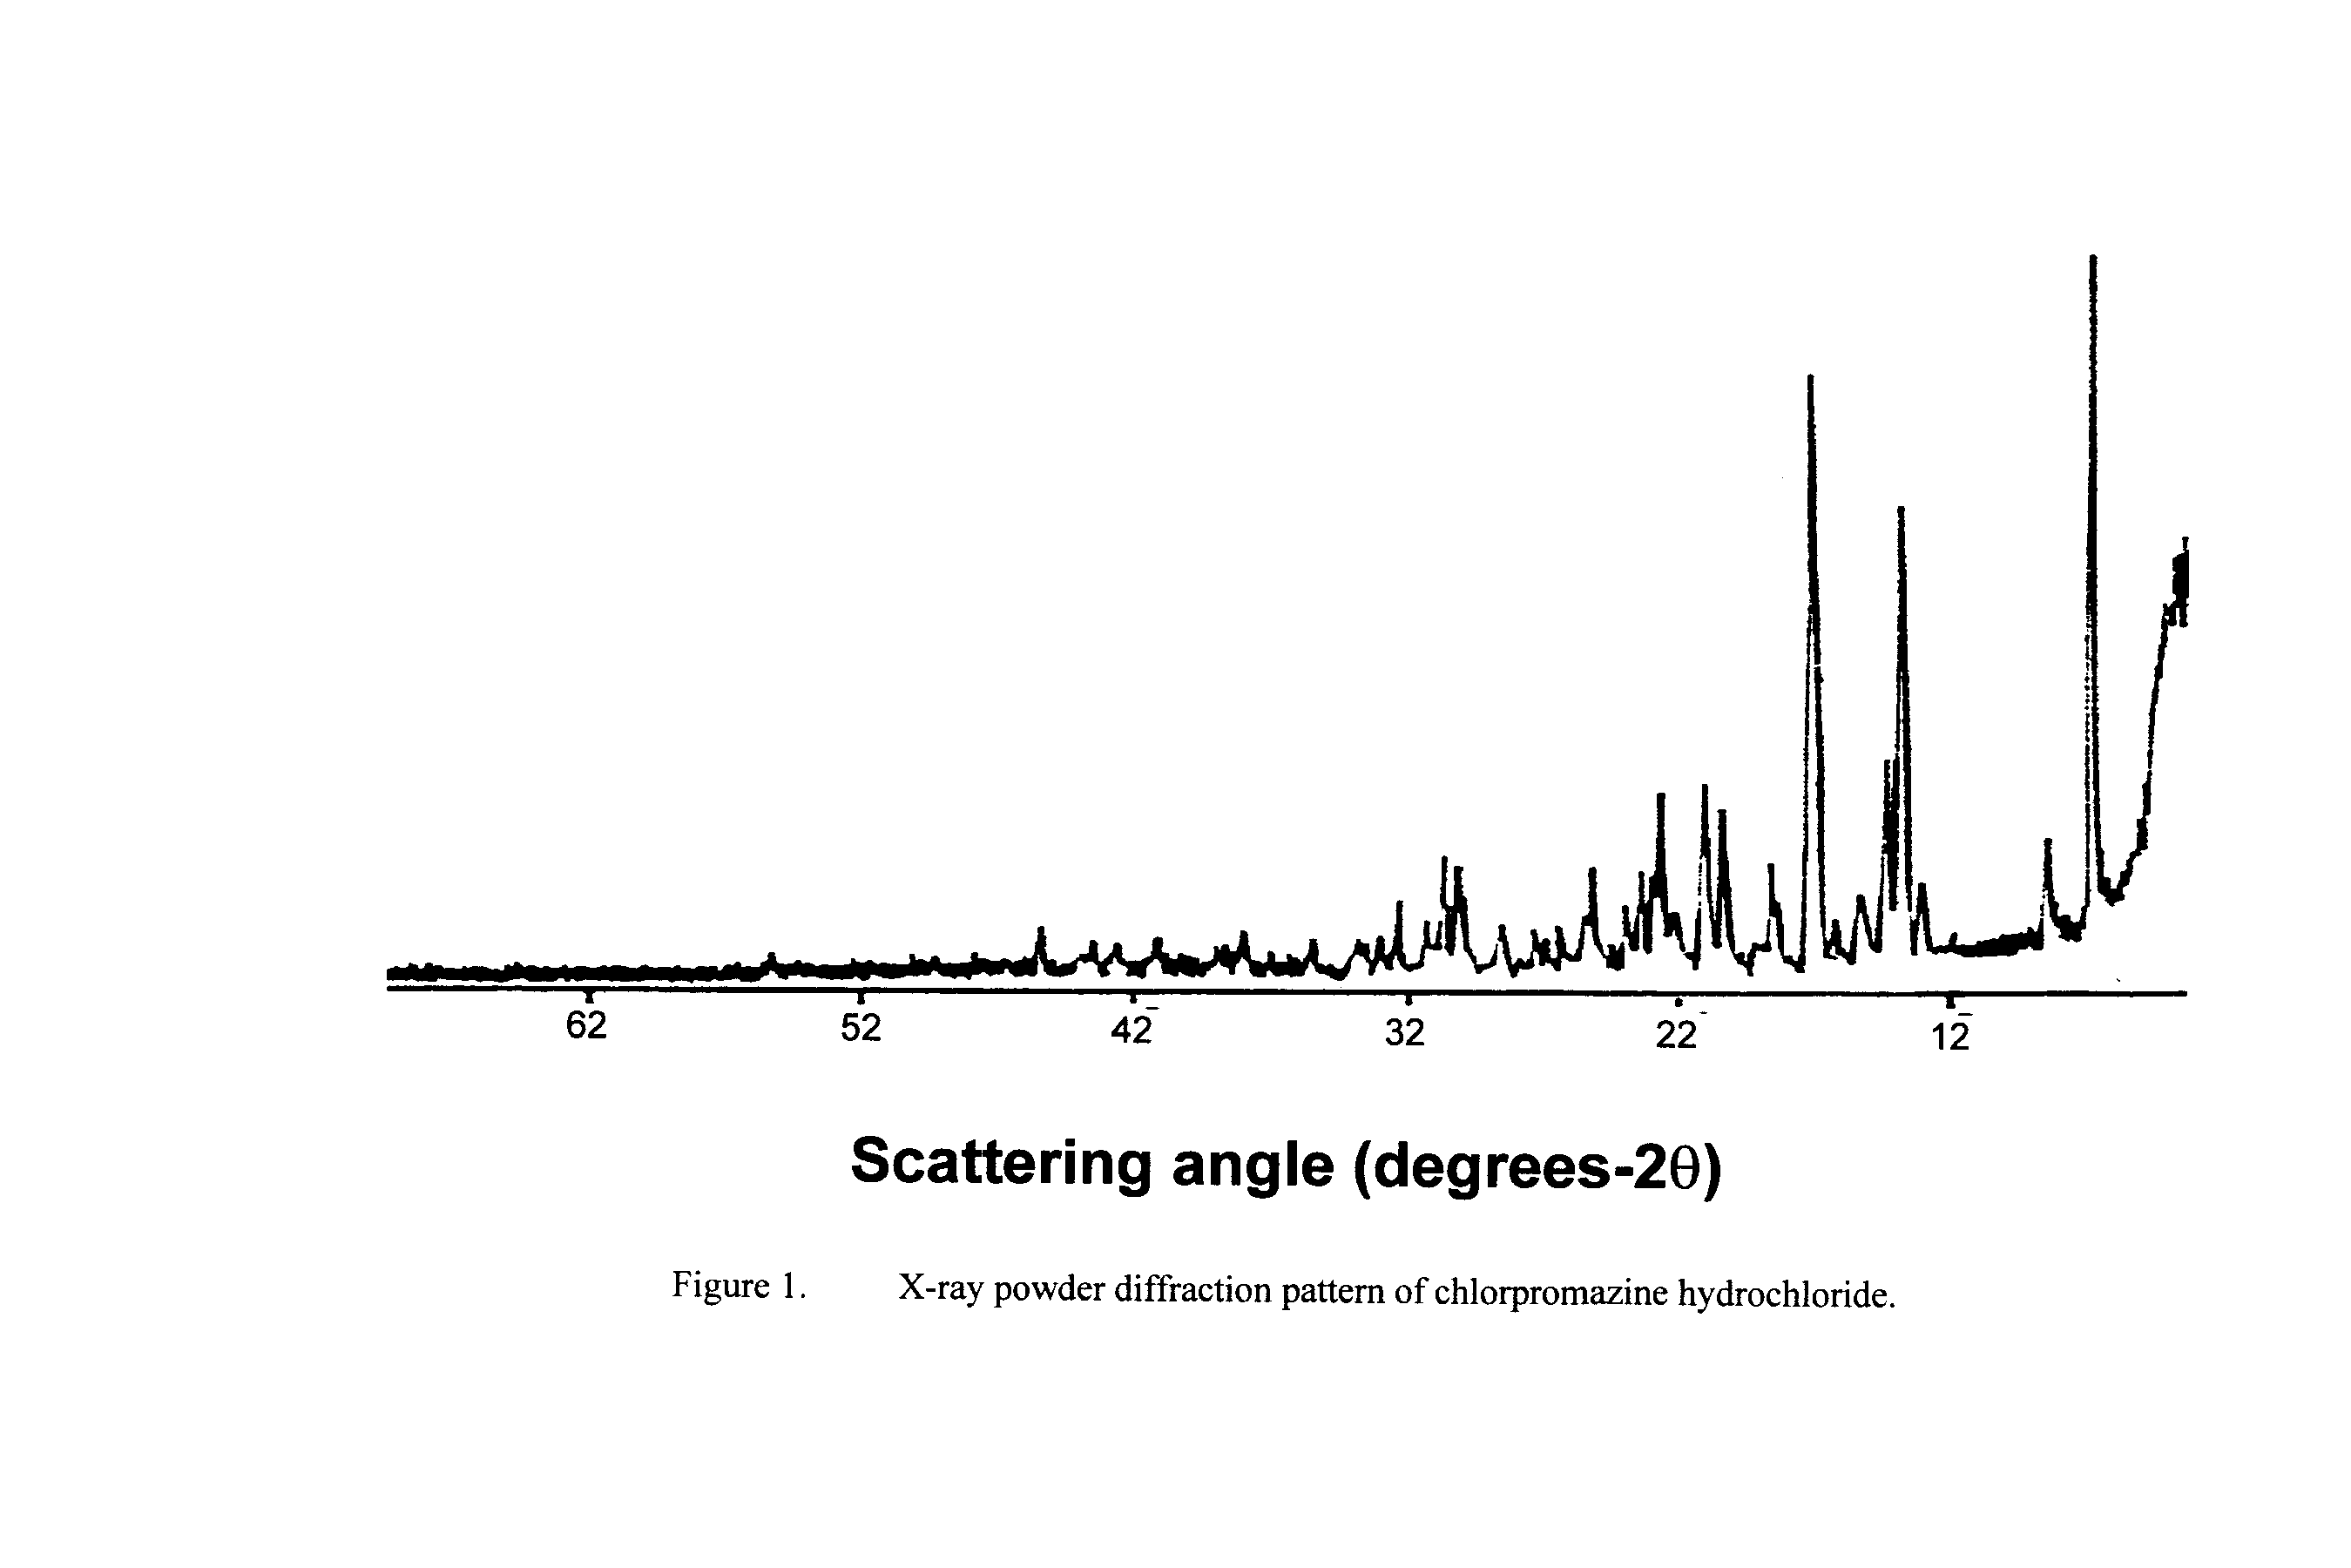 Figure 1. X-ray powder diffraction pattern of chlorpromazine hydrochloride.